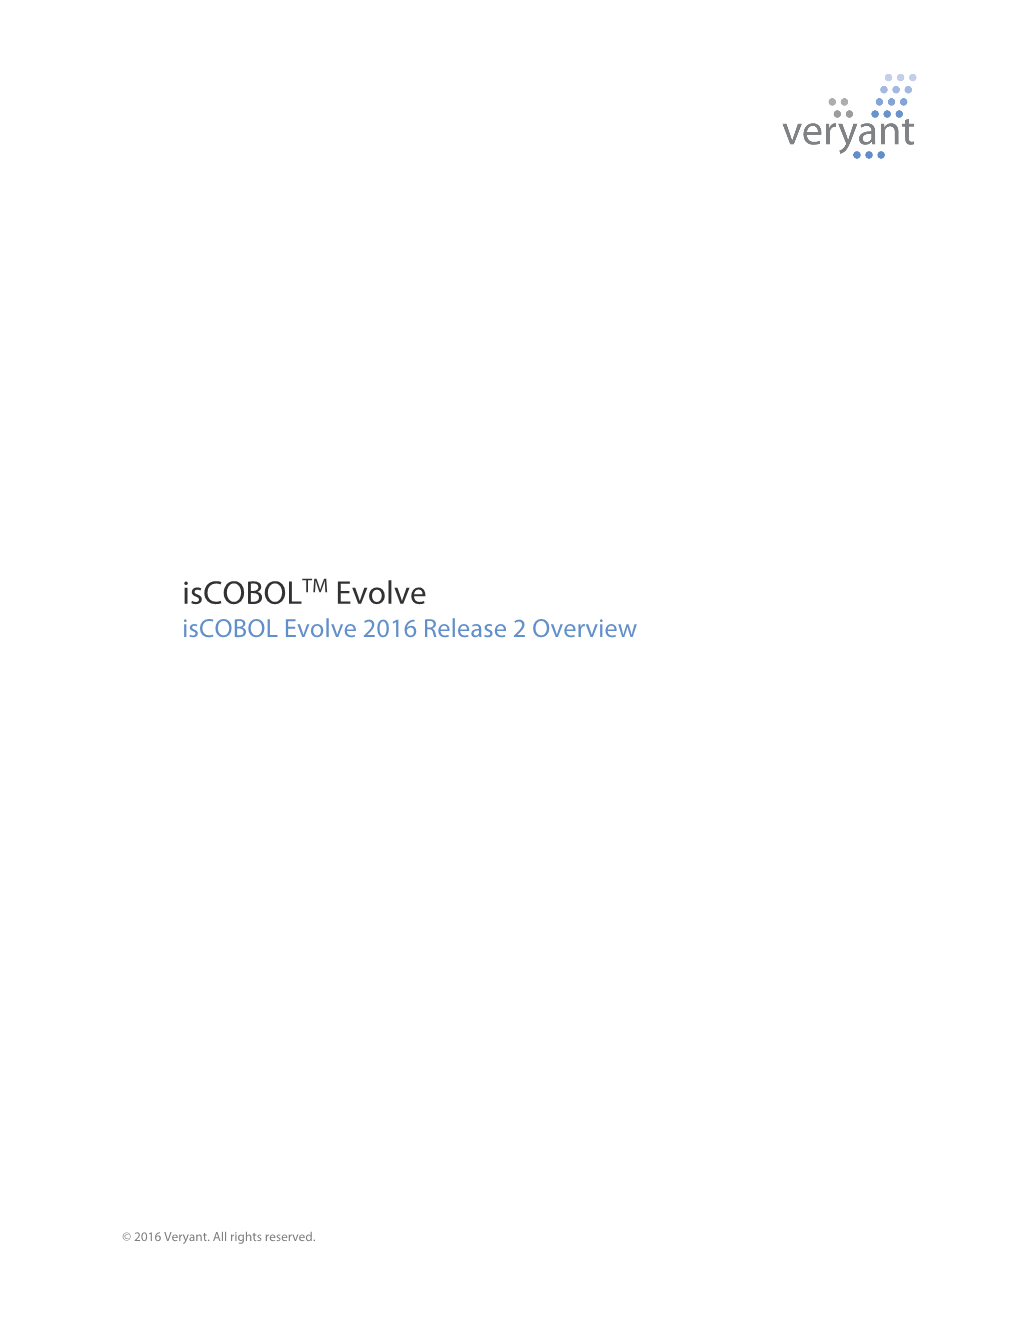 Iscoboltm Evolve Iscobol Evolve 2016 Release 2 Overview